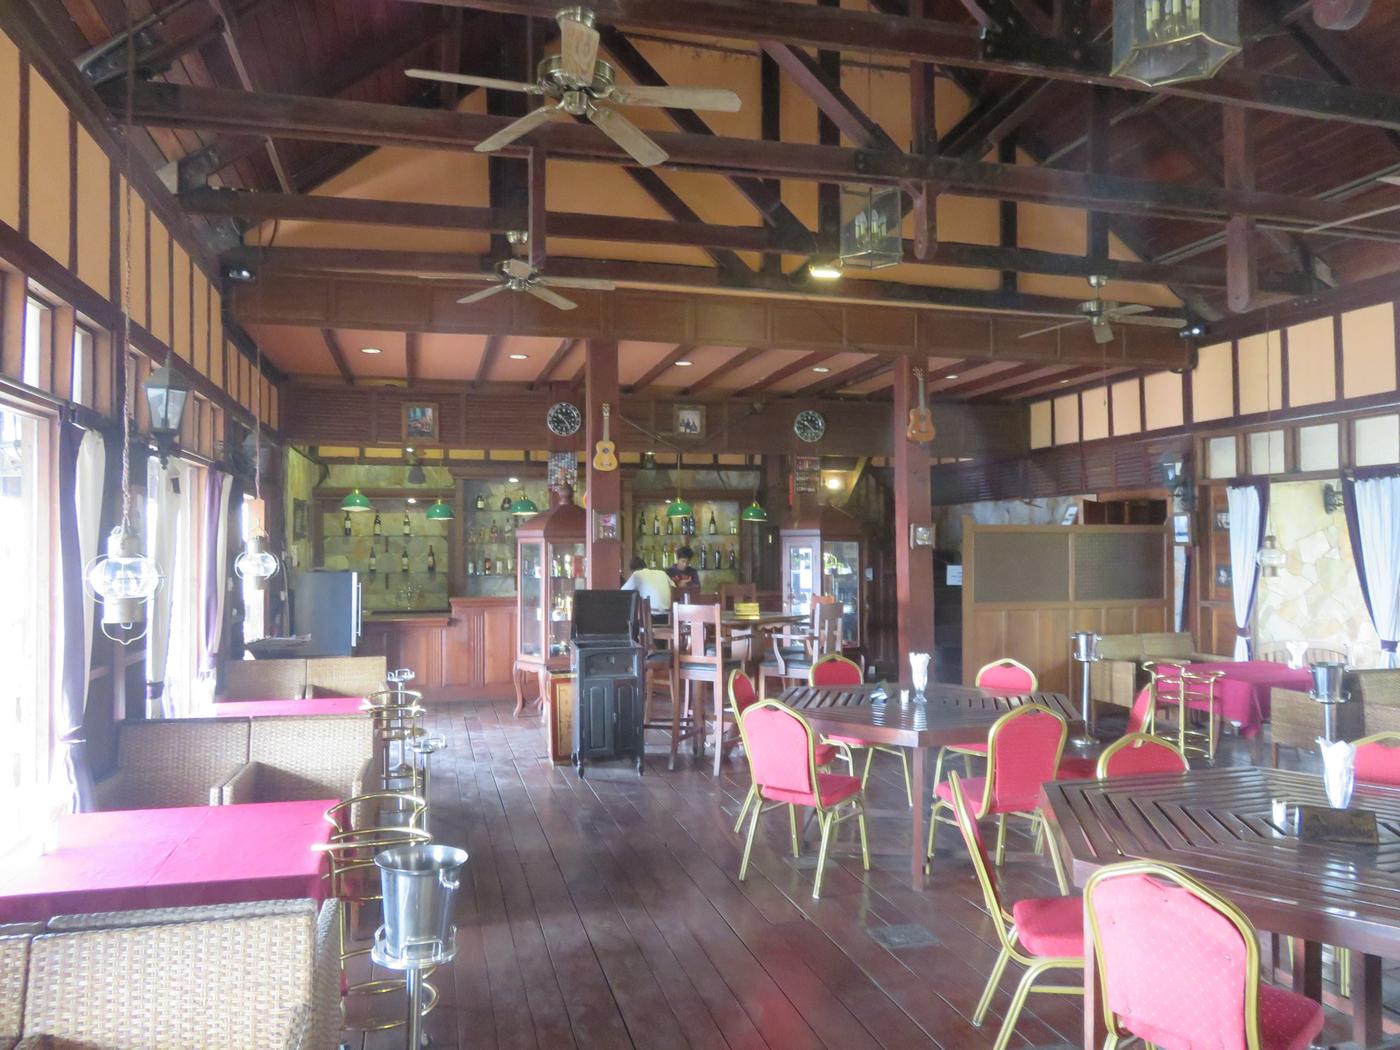 The View Resort, Pyin Oo Lwin